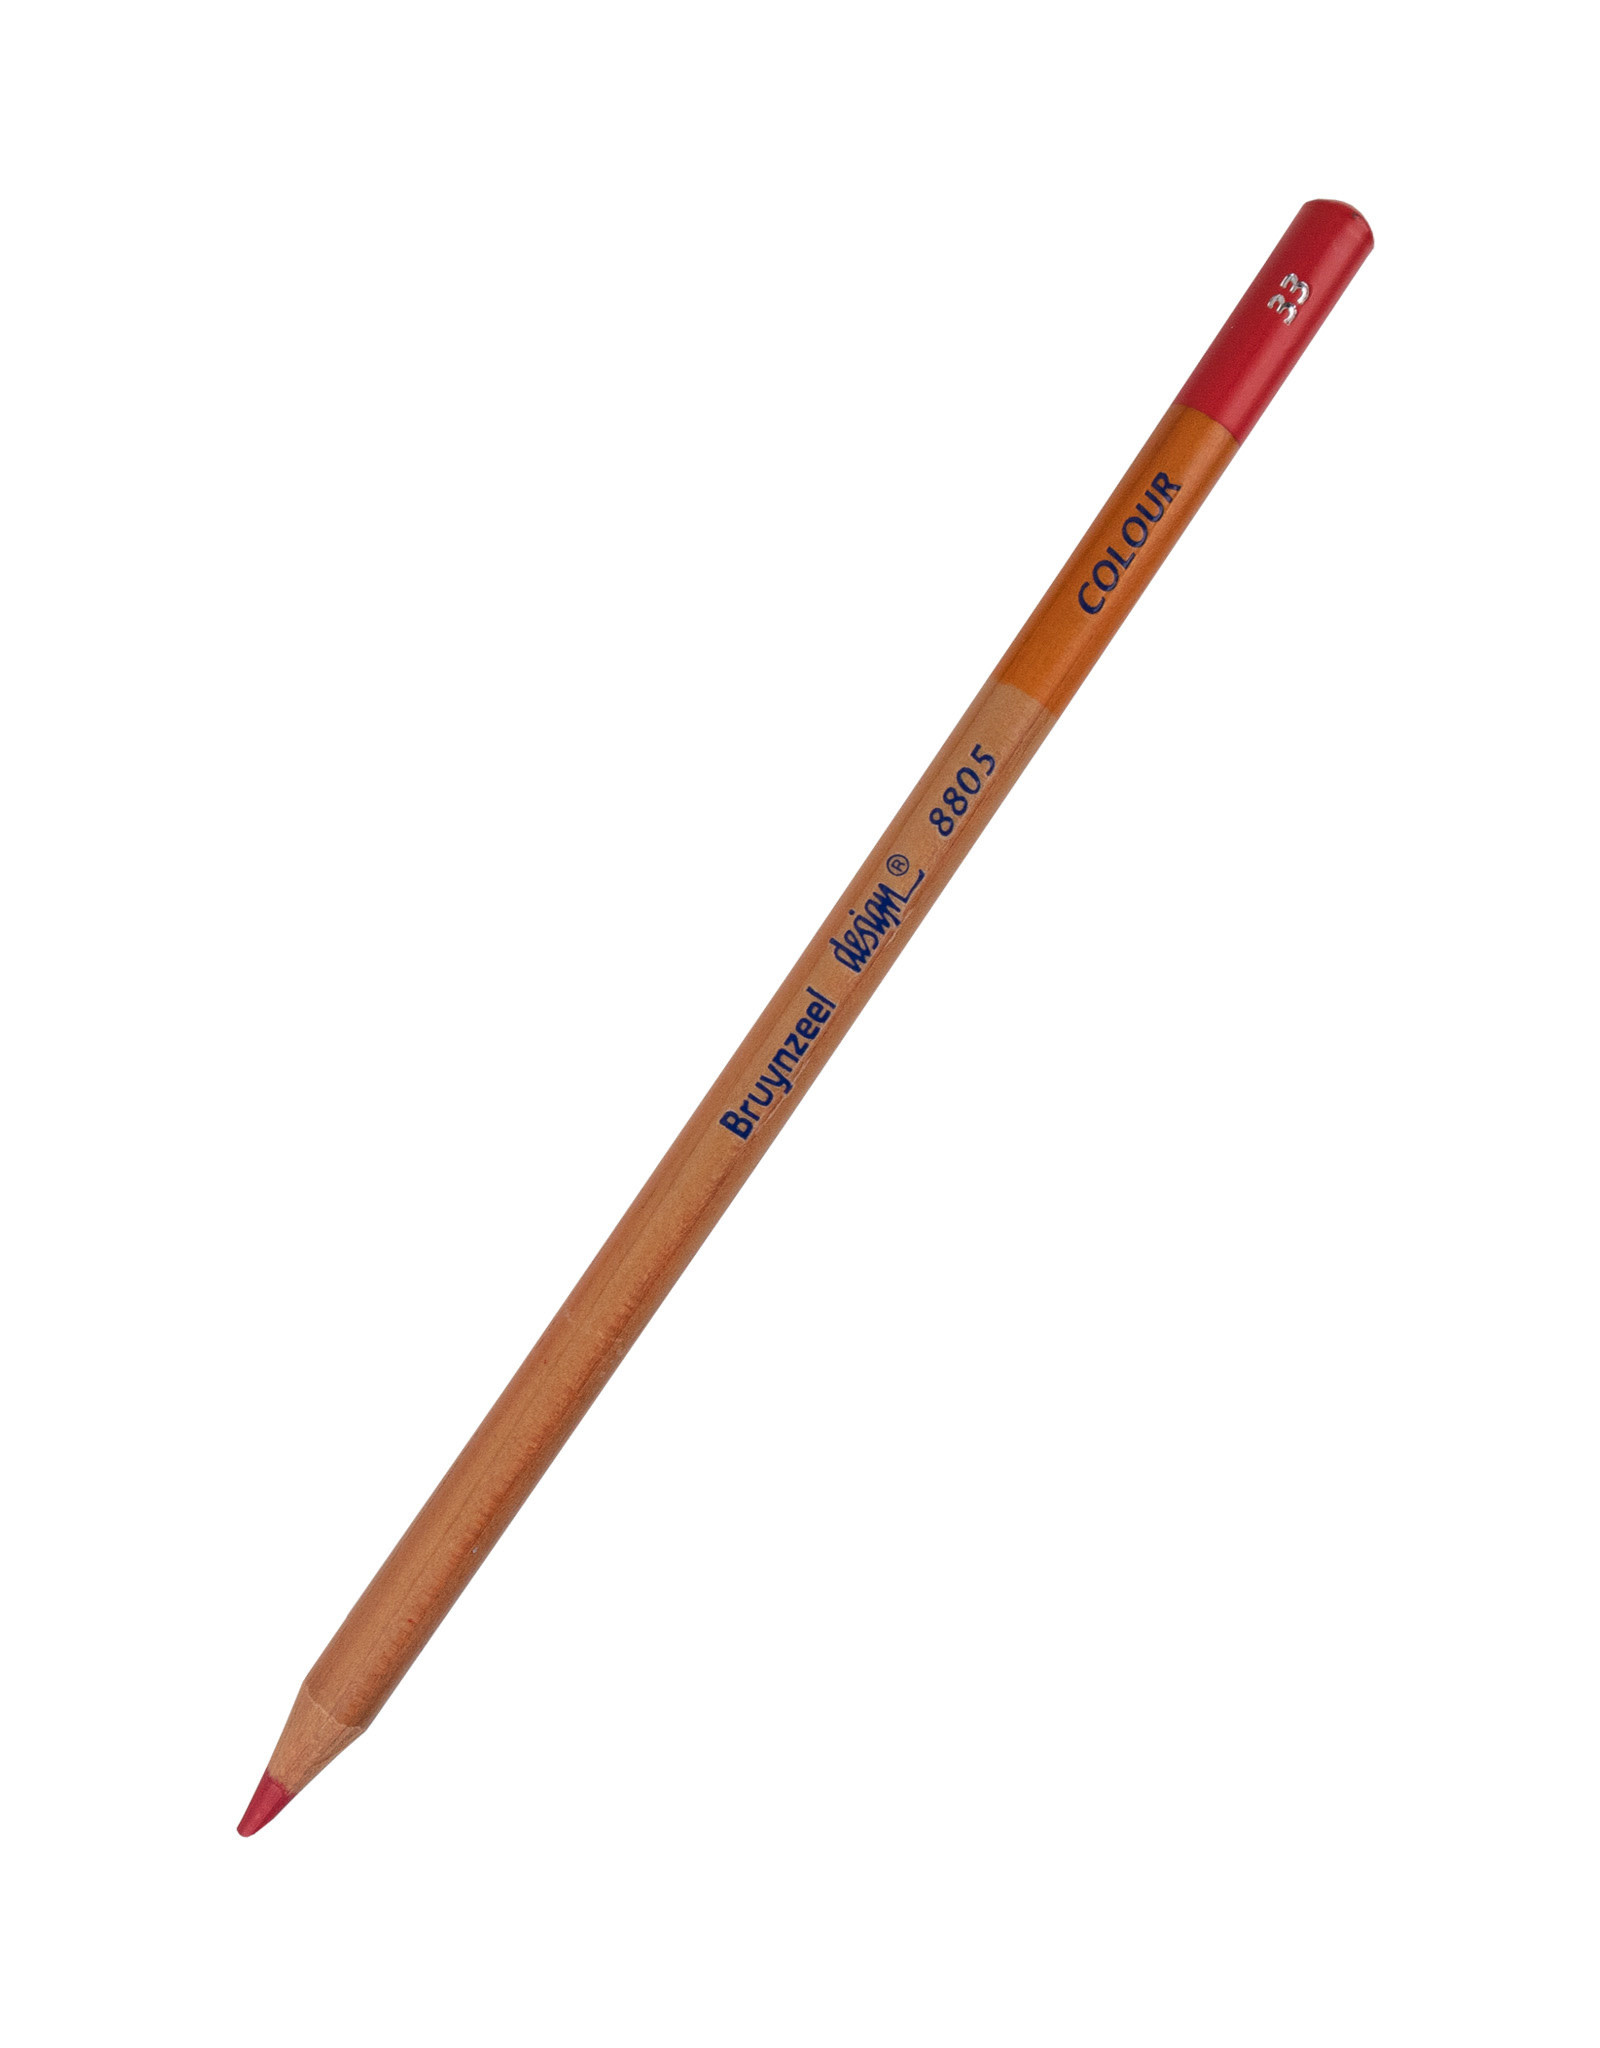 Royal Talens Bruynzeel Design Coloured Pencil, Deep Red